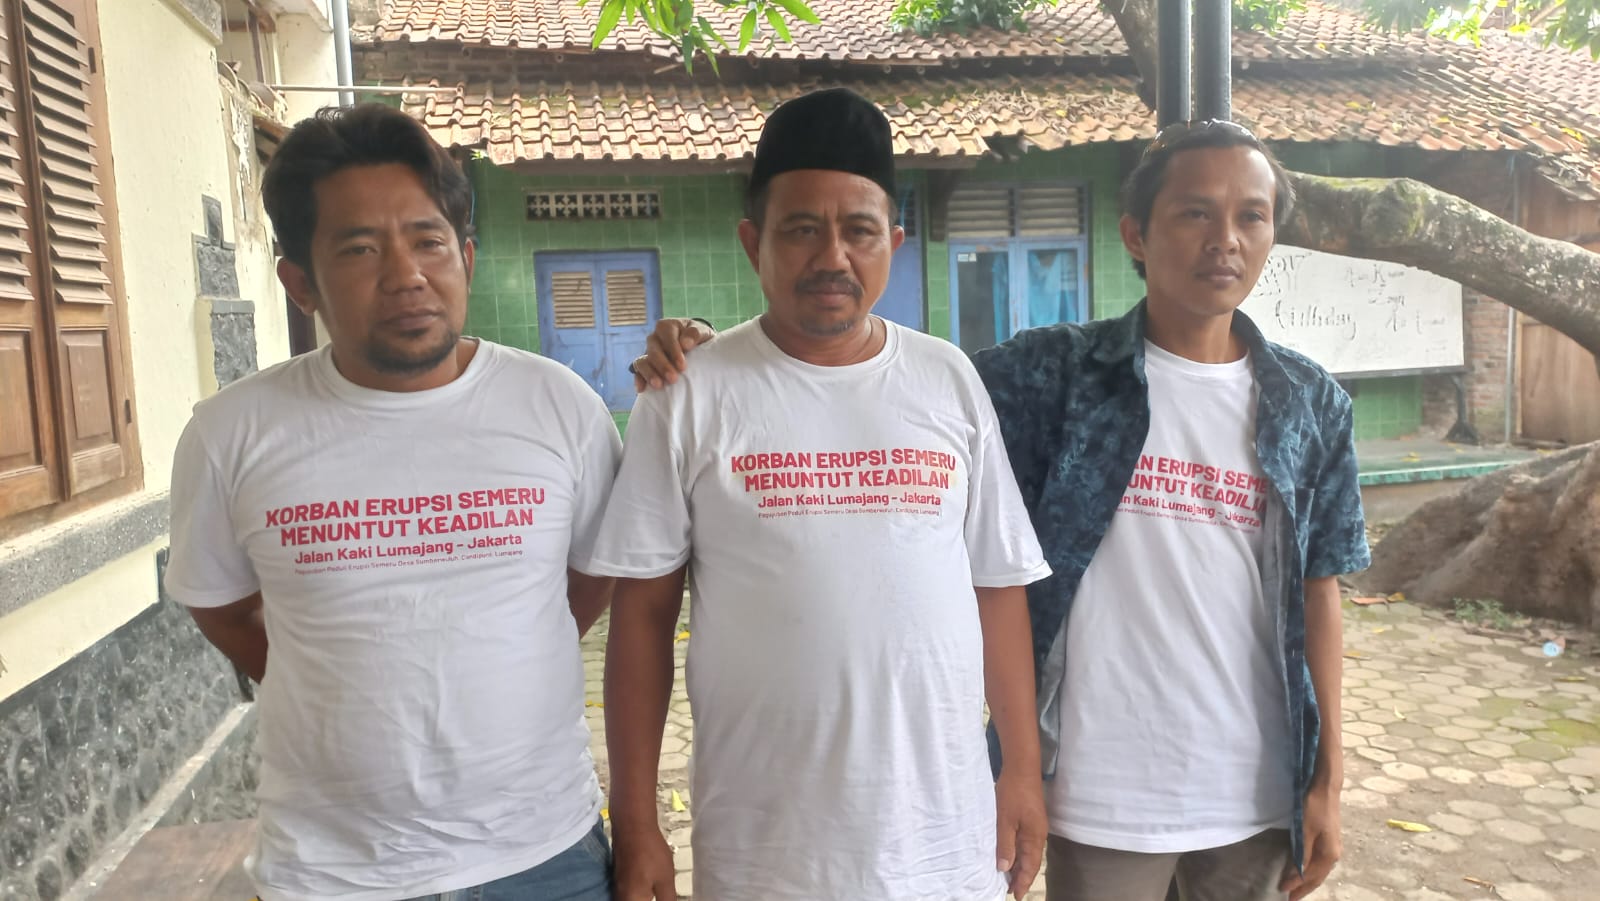 Korban Semeru Jalan Kaki Menuju Jakarta, Hendak Menemui Jokowi